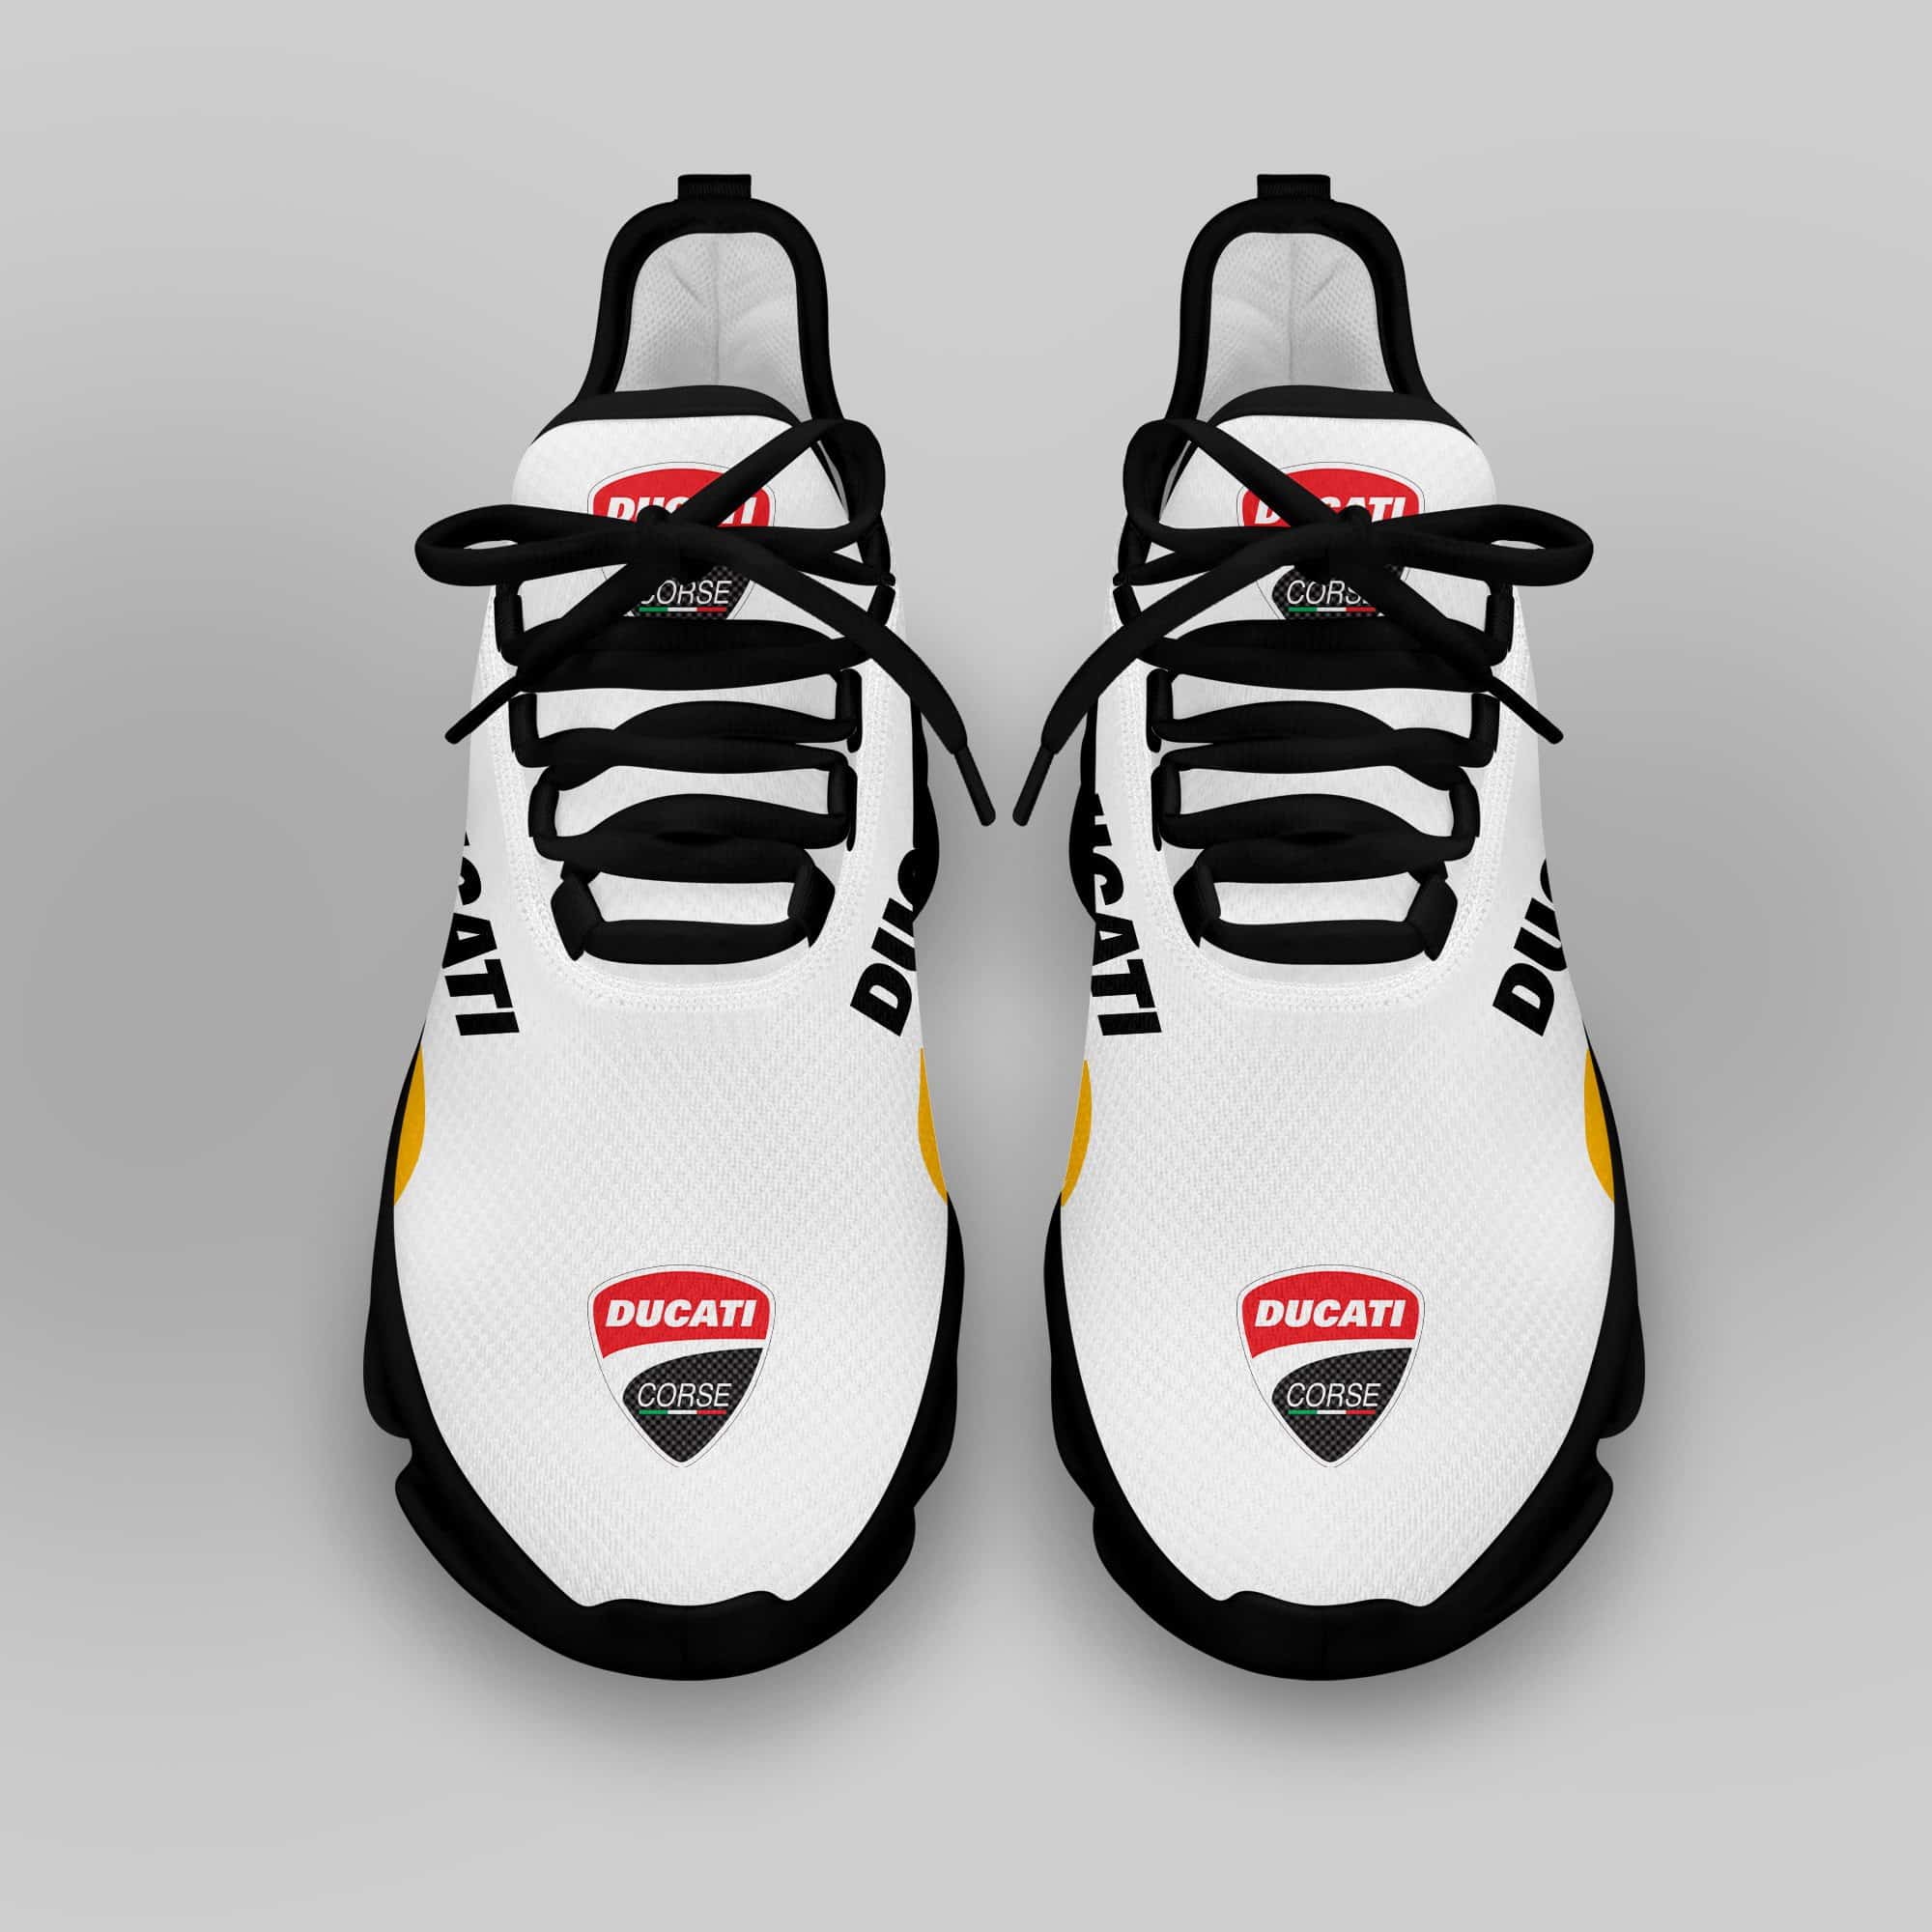 Ducati Racing Running Shoes Max Soul Shoes Sneakers Ver 64 4